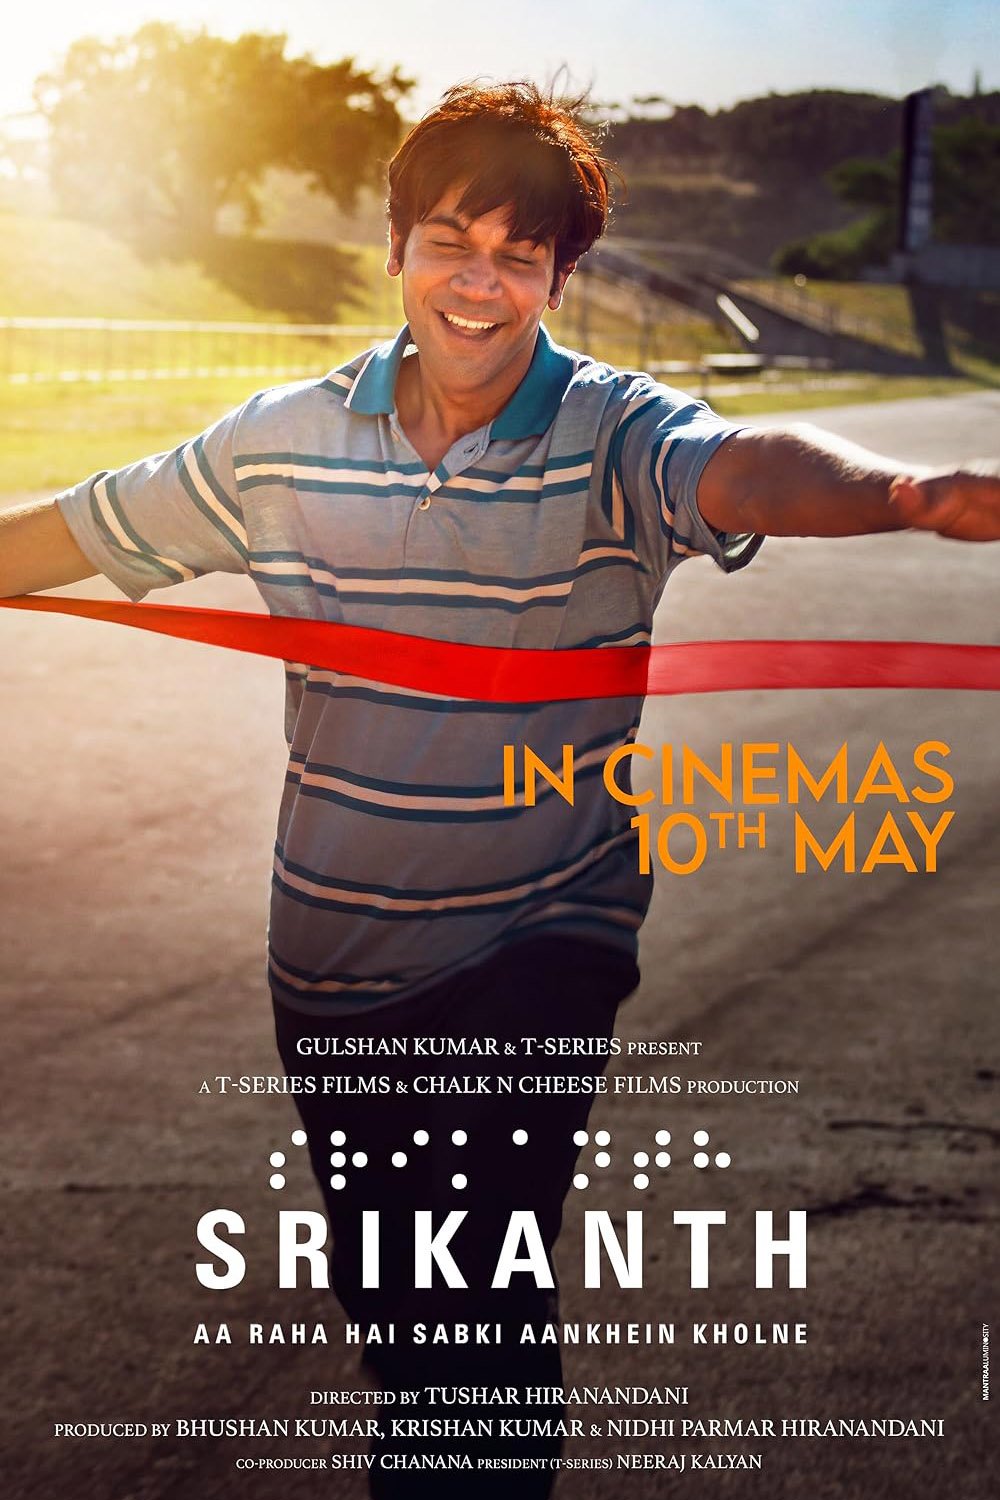 Hindi poster of the movie Srikanth